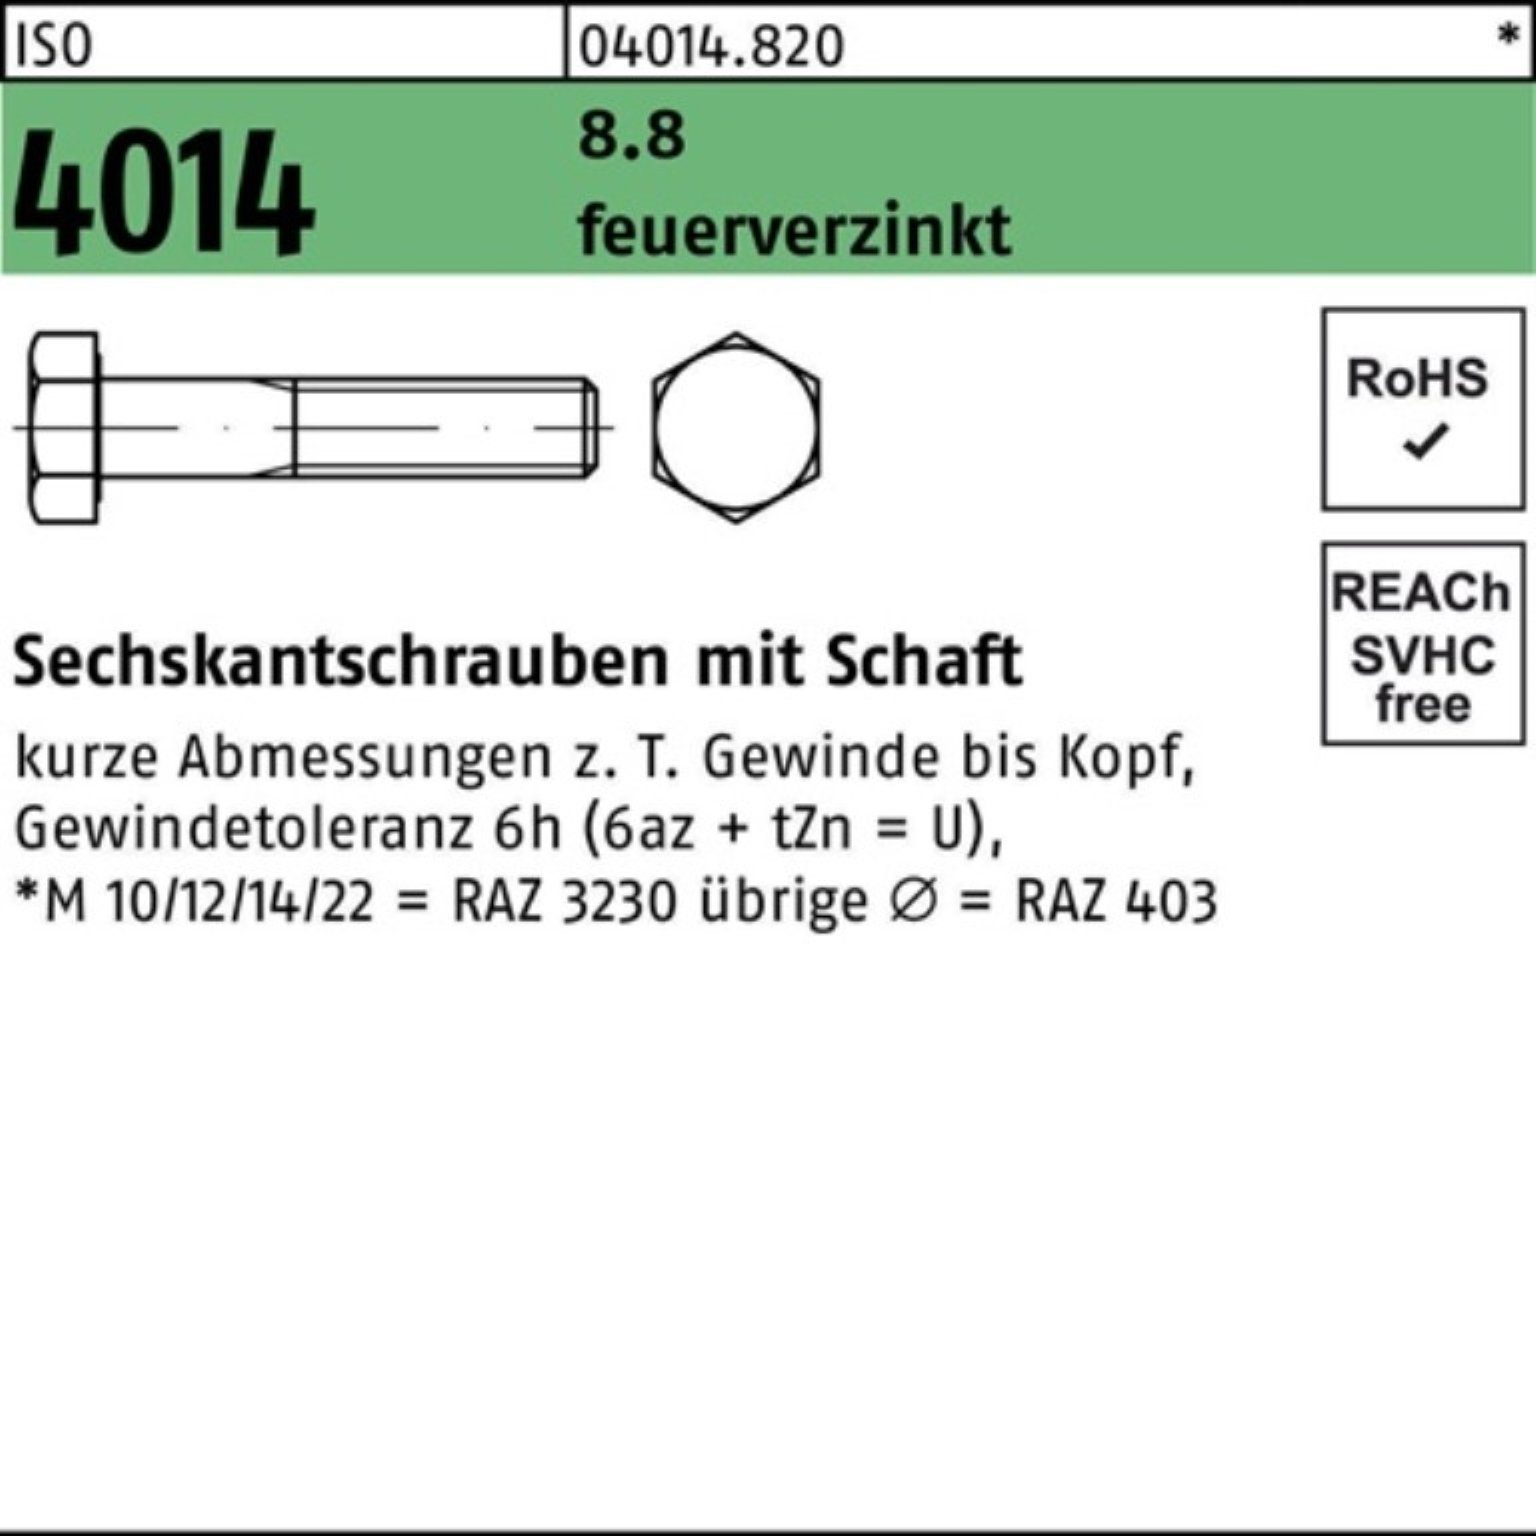 Bufab Sechskantschraube 100er Pack Sechskantschraube ISO 4014 Schaft M20x 220 8.8 feuerverz. 1 | Schrauben